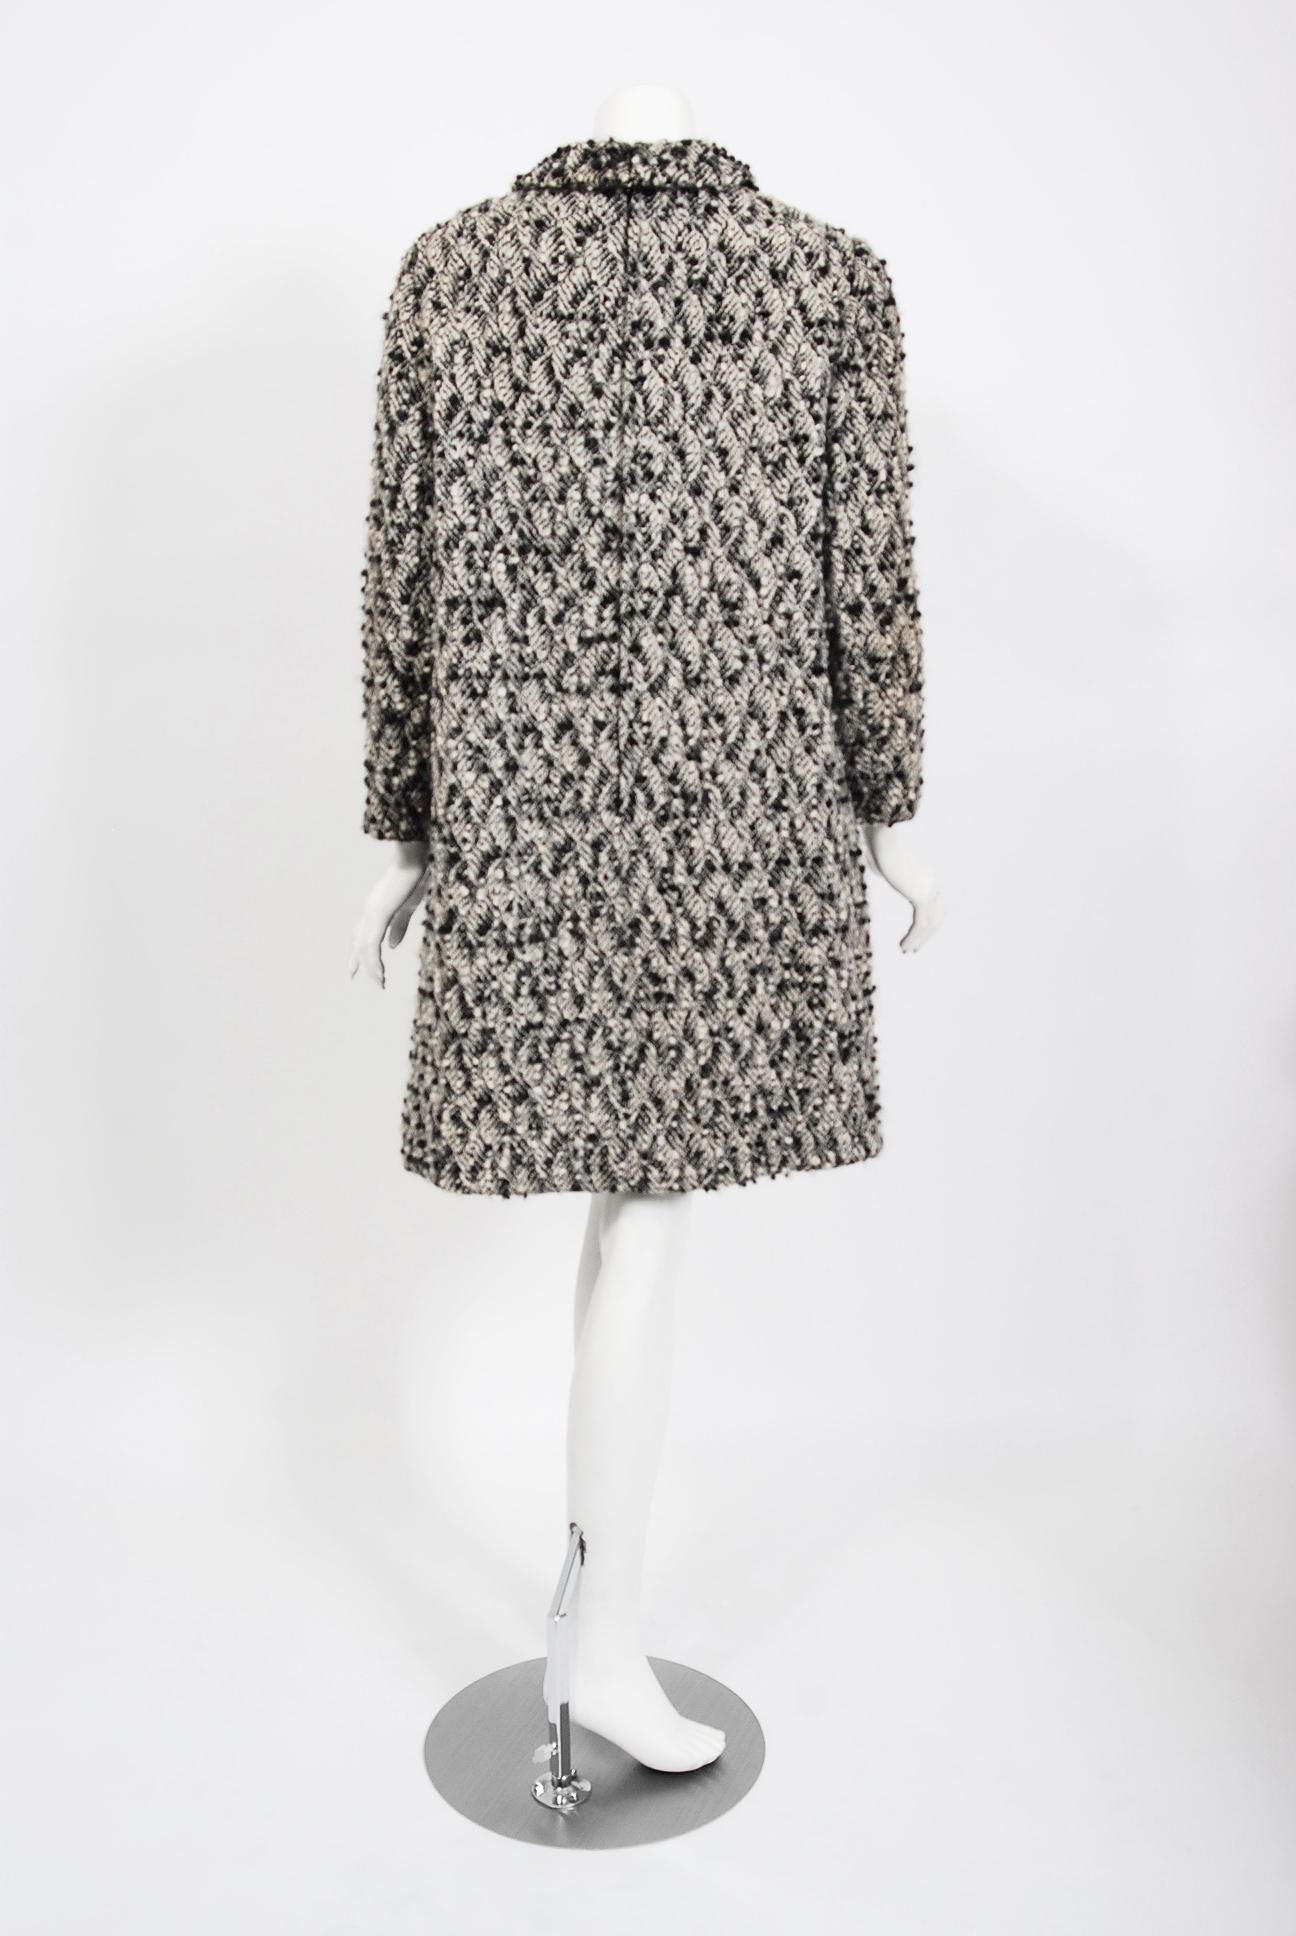 1965 Bill Blass Black & Ivory Textured Wool Dolly-Bow Mod Pockets Coat Dress 2